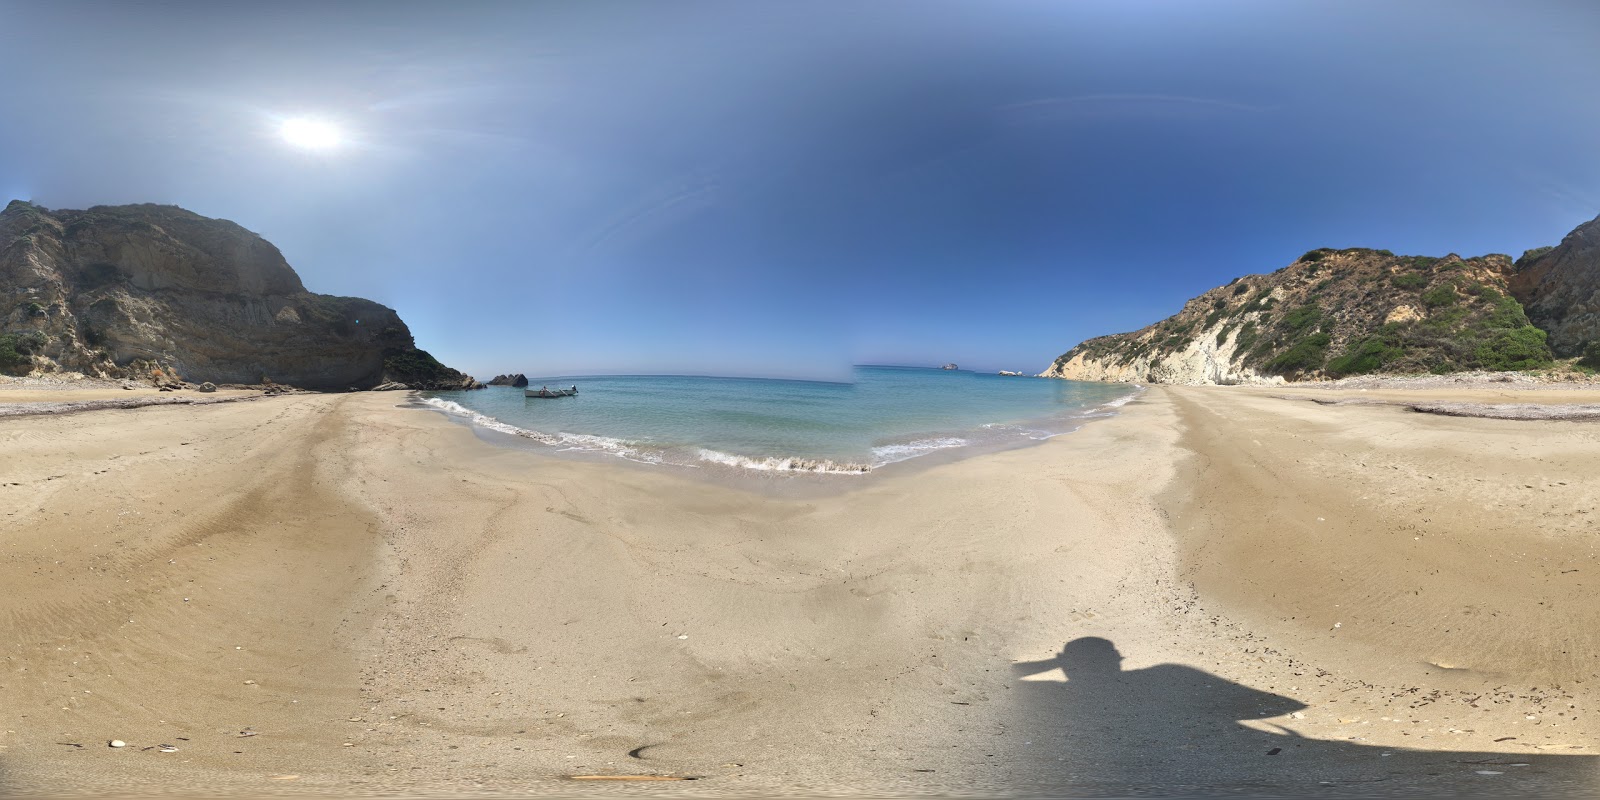 Fotografija Nipsias beach z turkizna čista voda površino